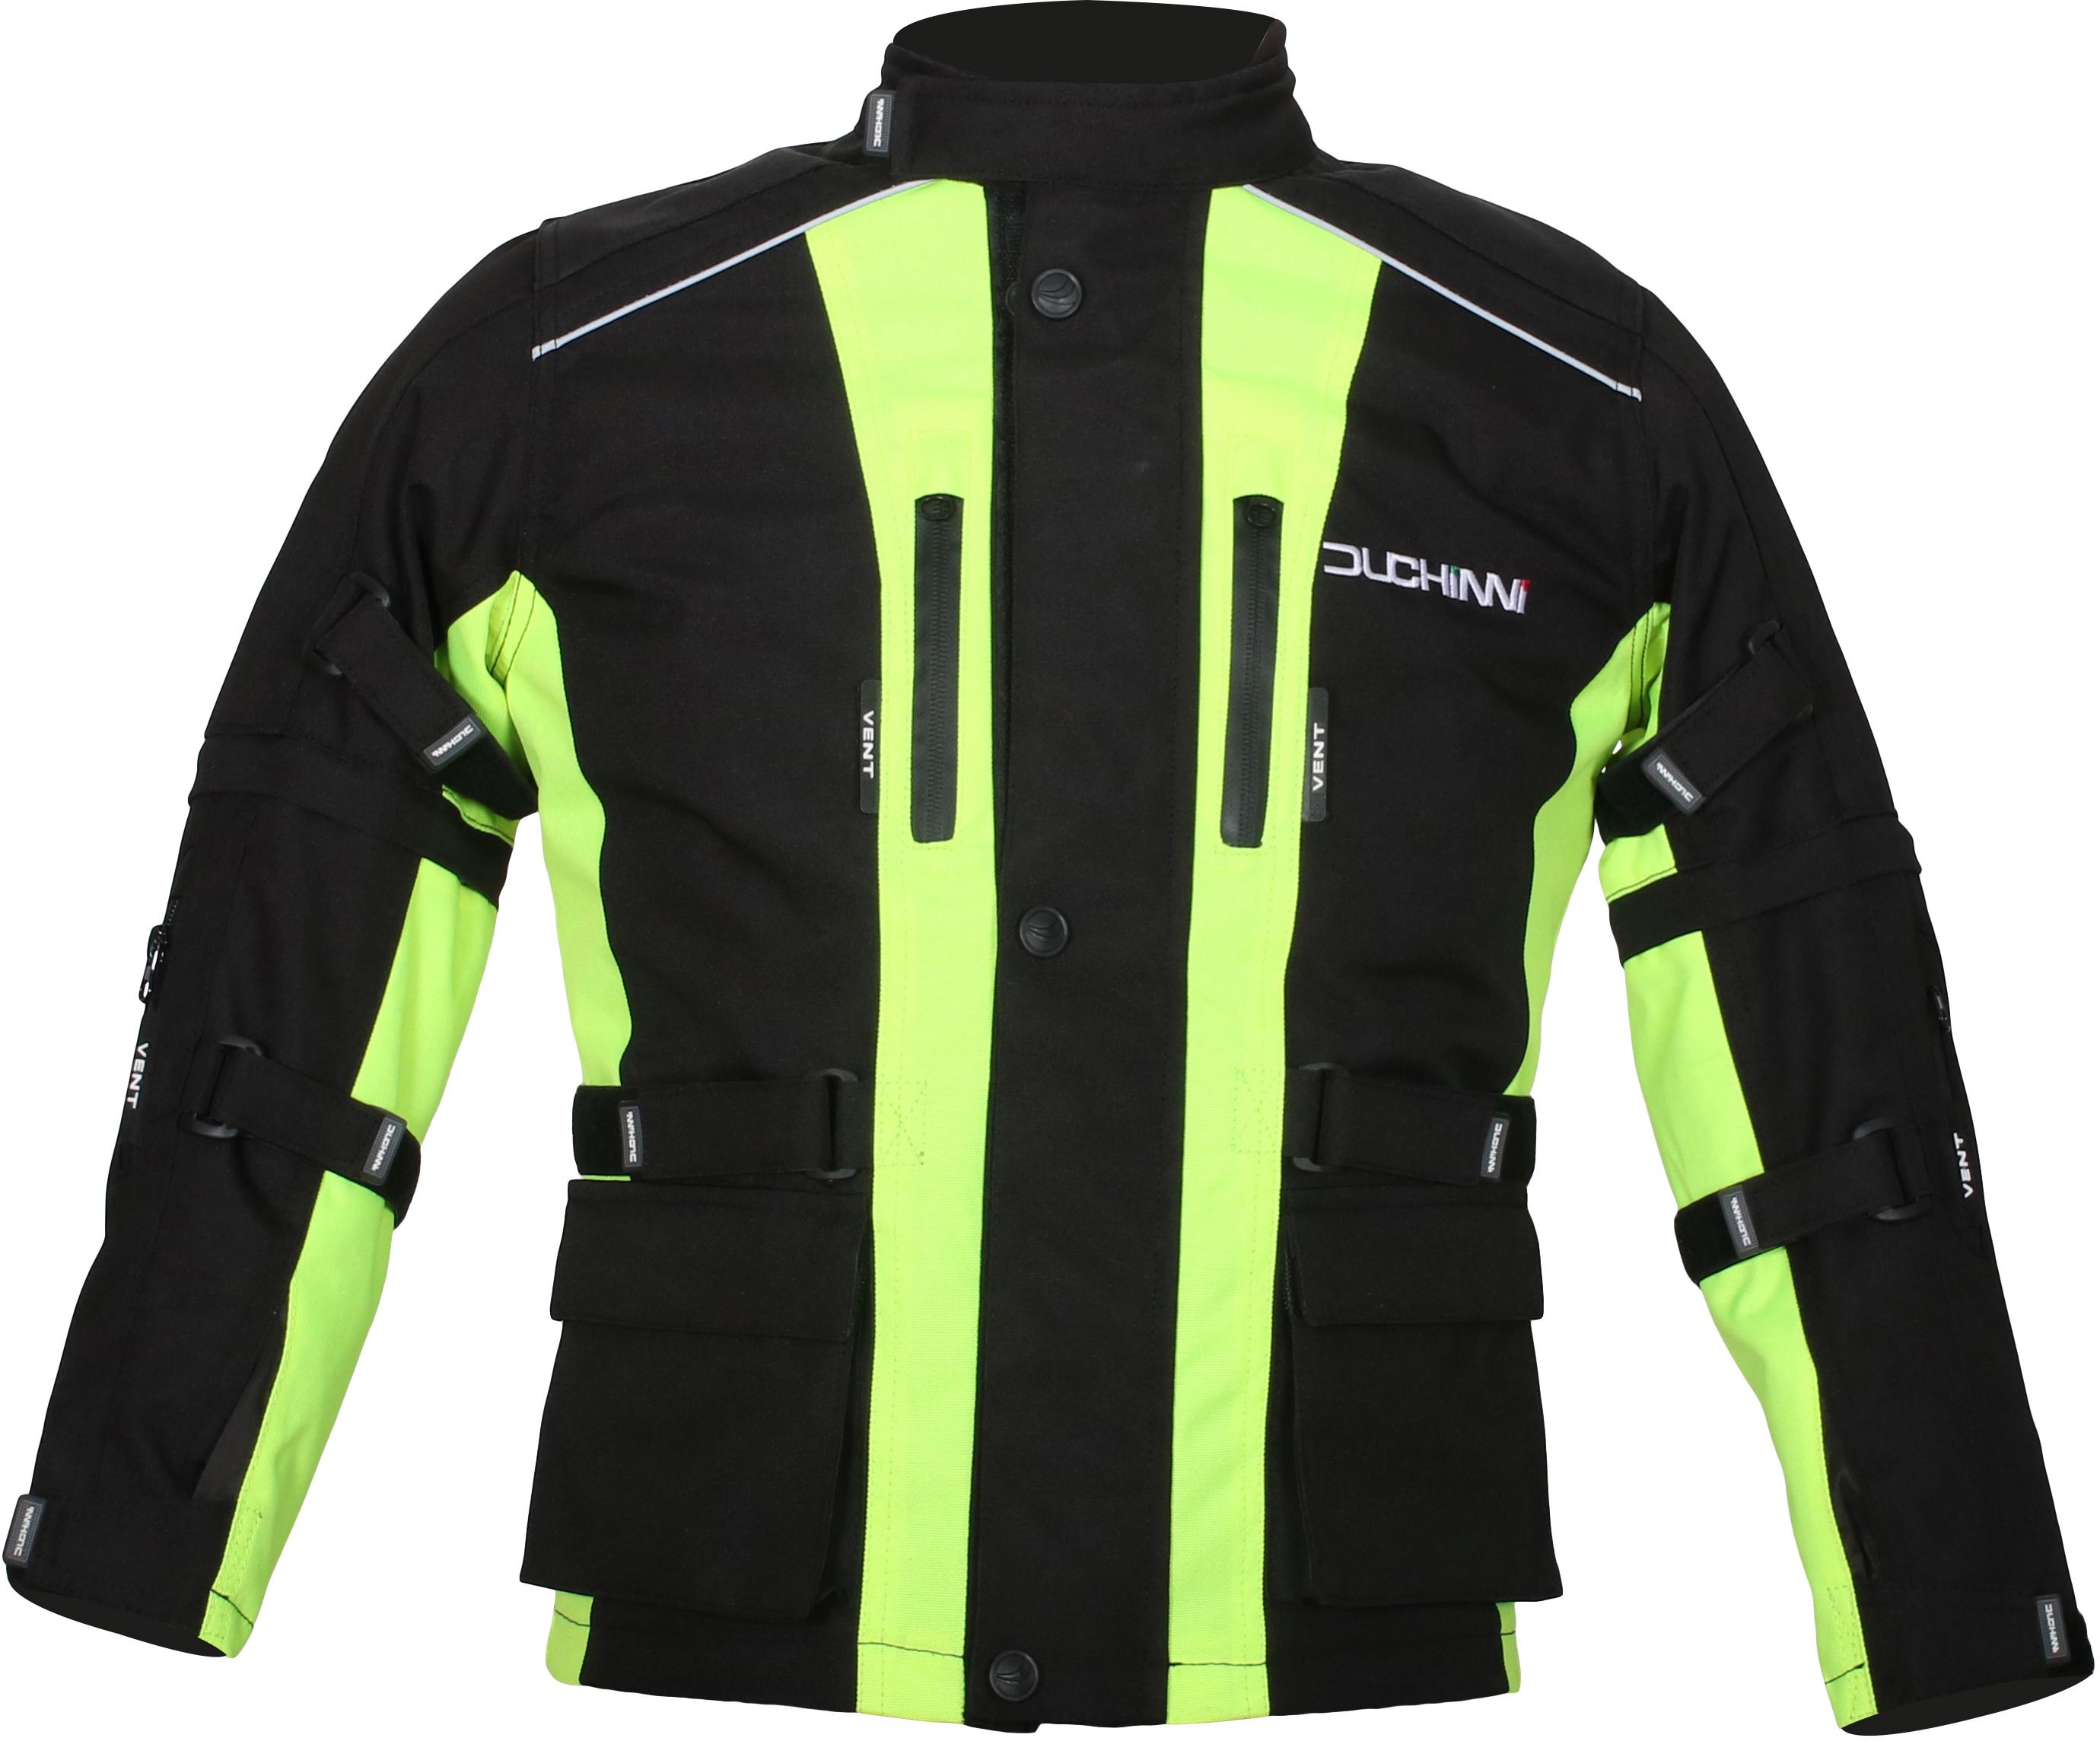 Duchinni Jago Youth Motorcycle Jacket - Black And Neon, M